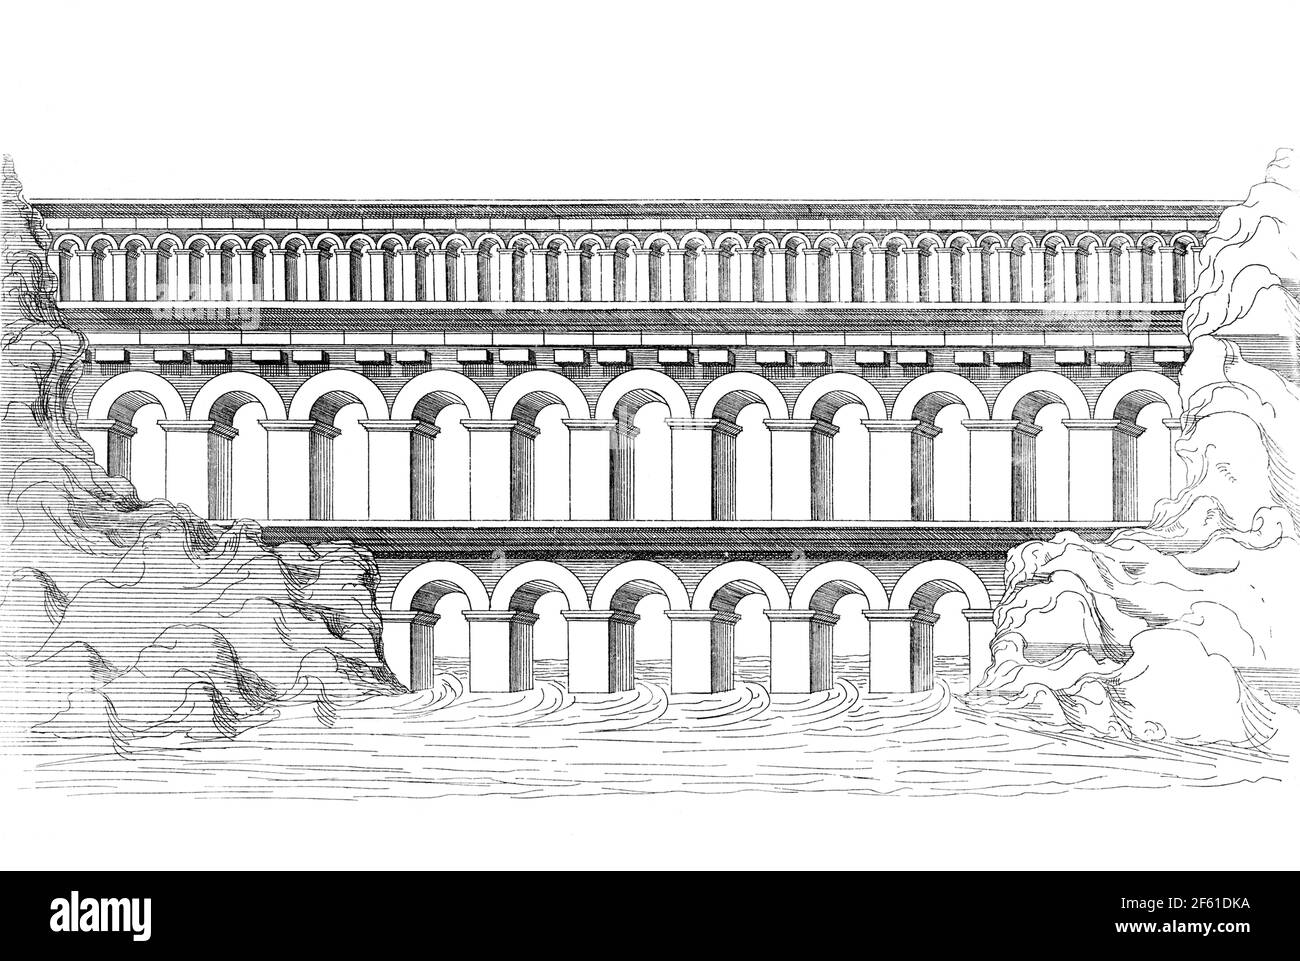 Pont du Gard, aqueduc romain antique Banque D'Images